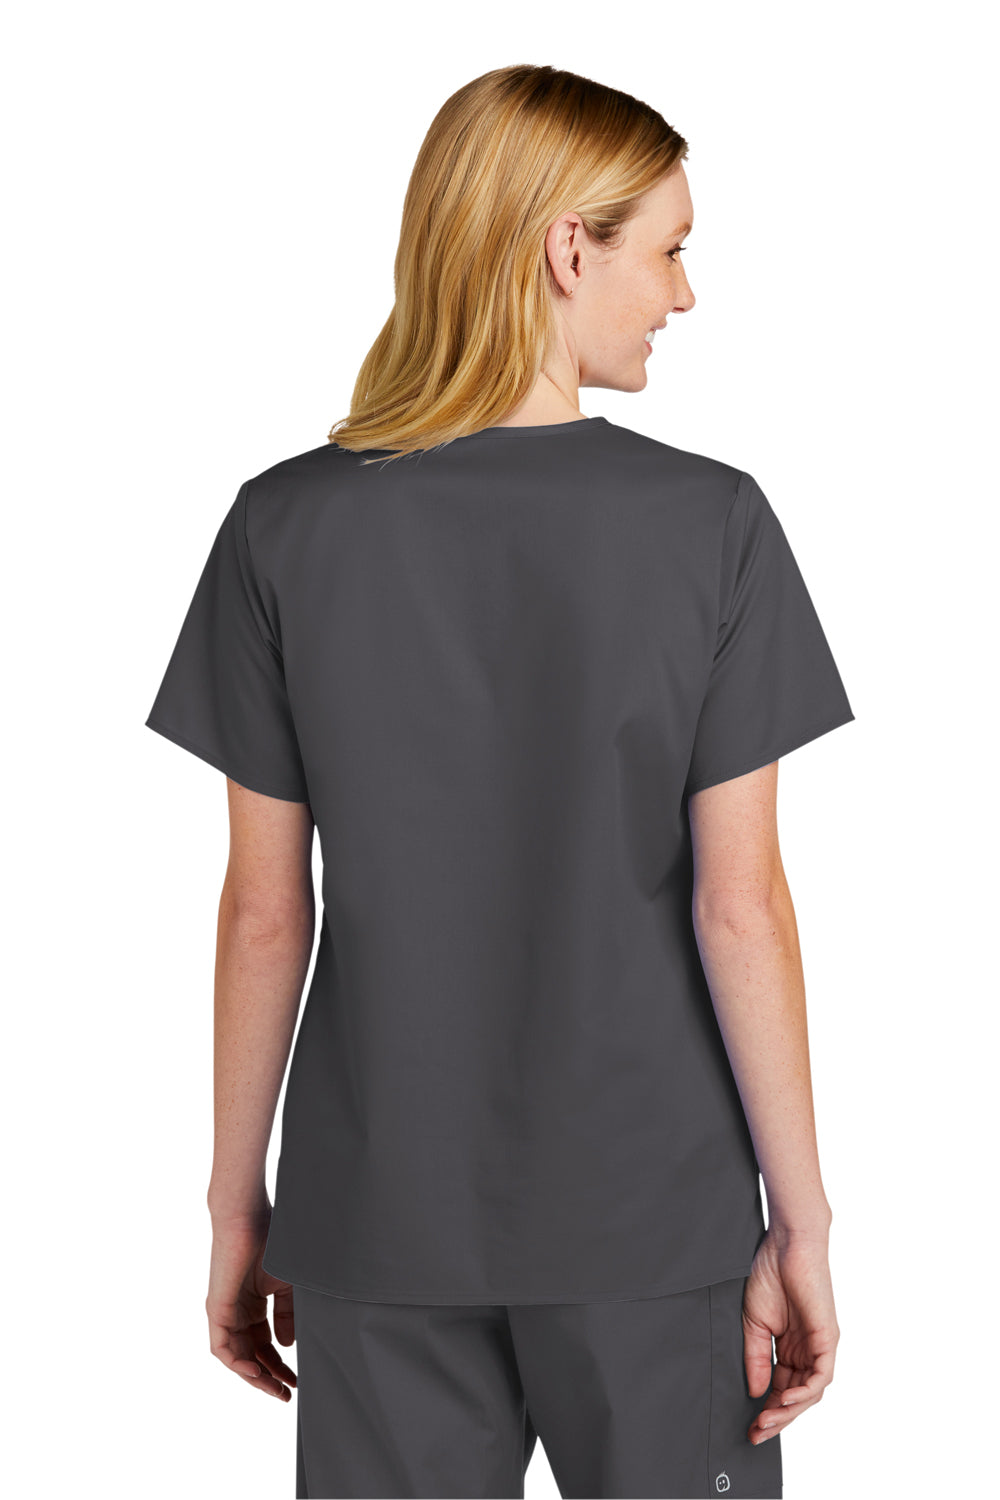 Wonderwink WW4560 WorkFlex Short Sleeve V-Neck Shirt Pewter Grey Back